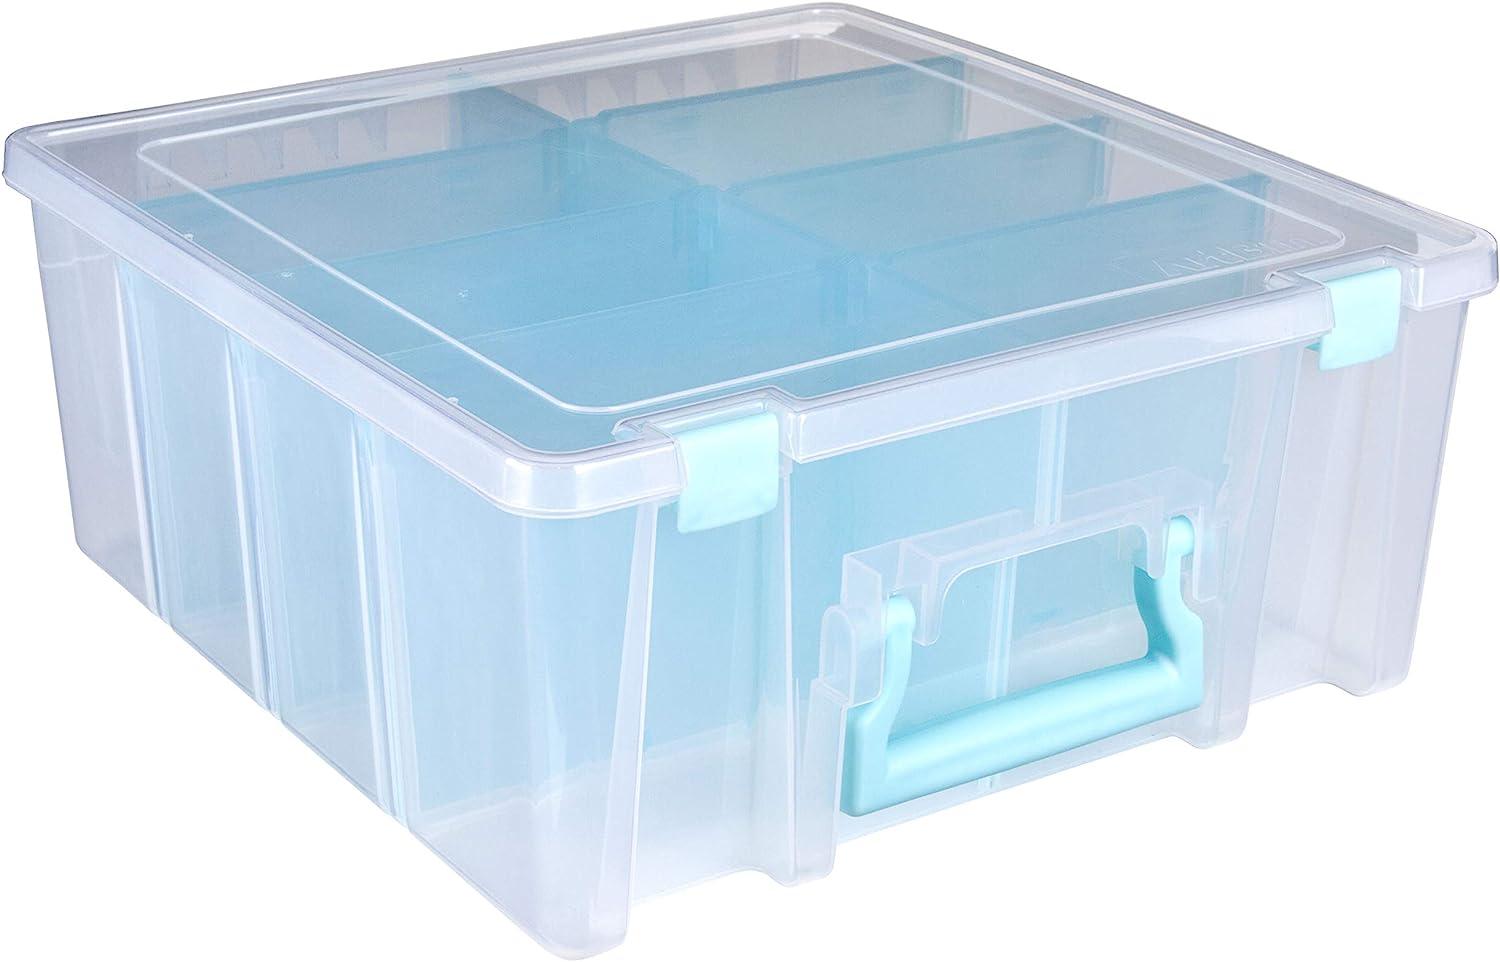 Biyomap Reusable Artwork Shipping And Storage Bag : 60x70cm (Blue)